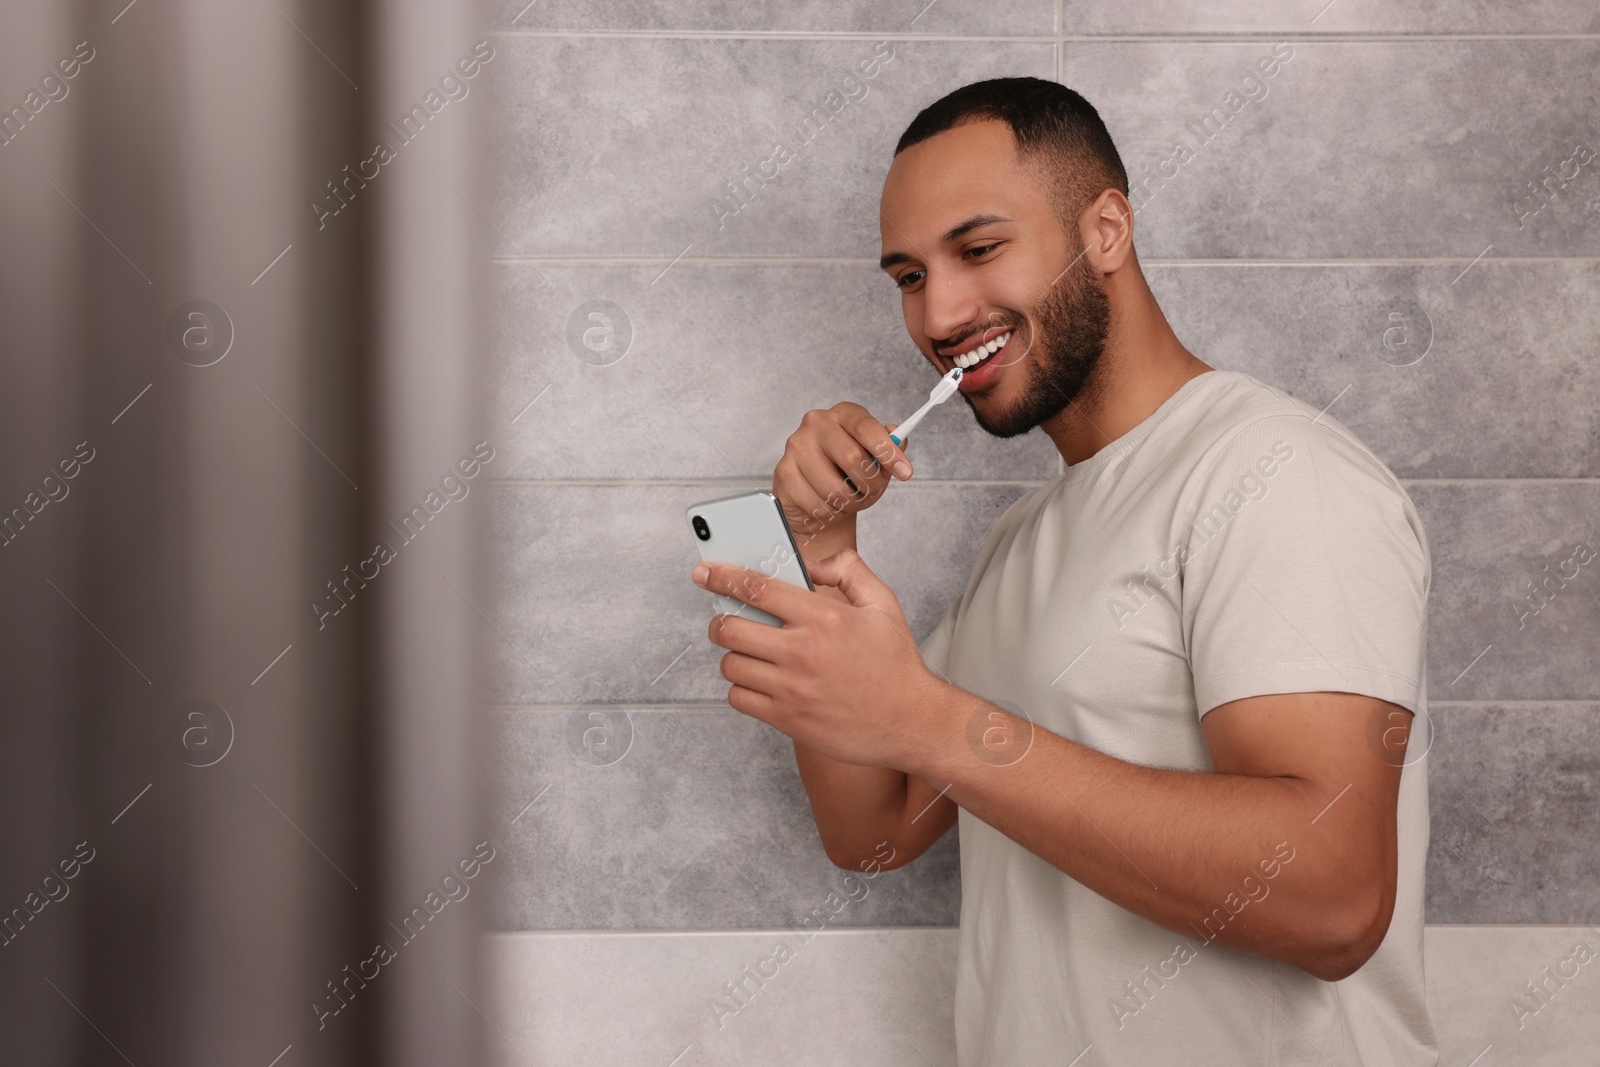 Photo of Happy man using smartphone while brushing teeth in bathroom. Internet addiction